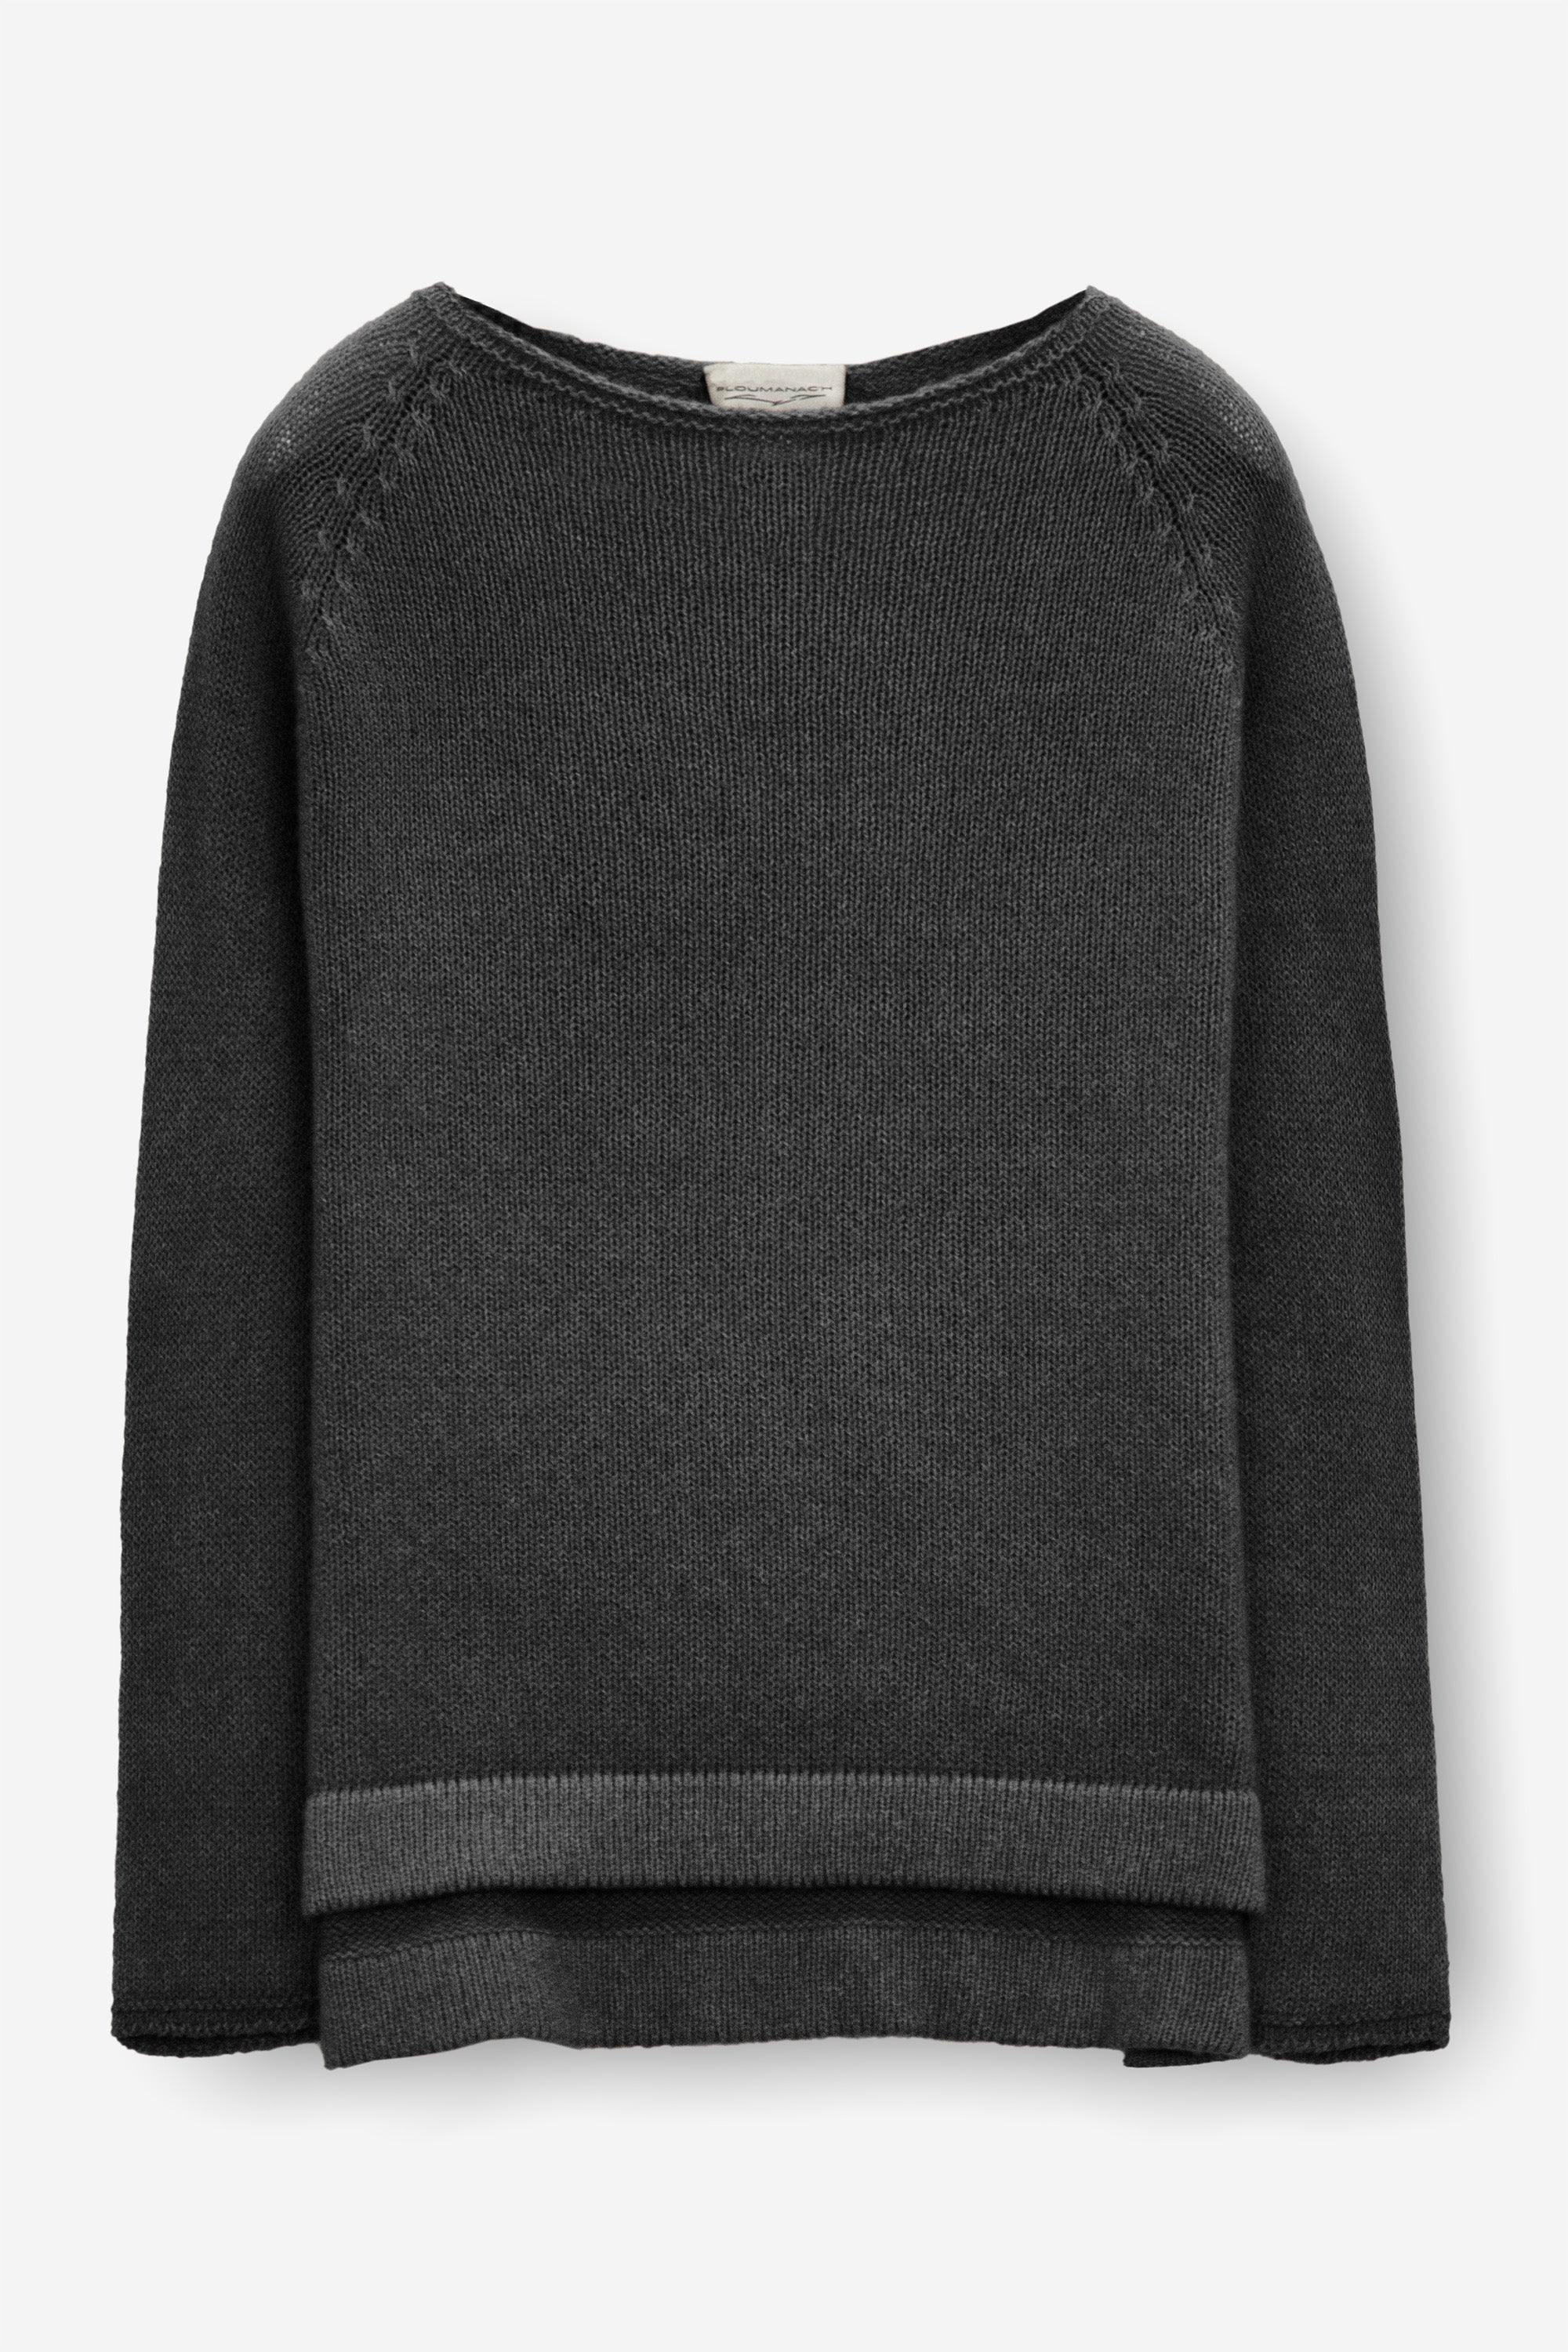 Appin Sweater - Basalt